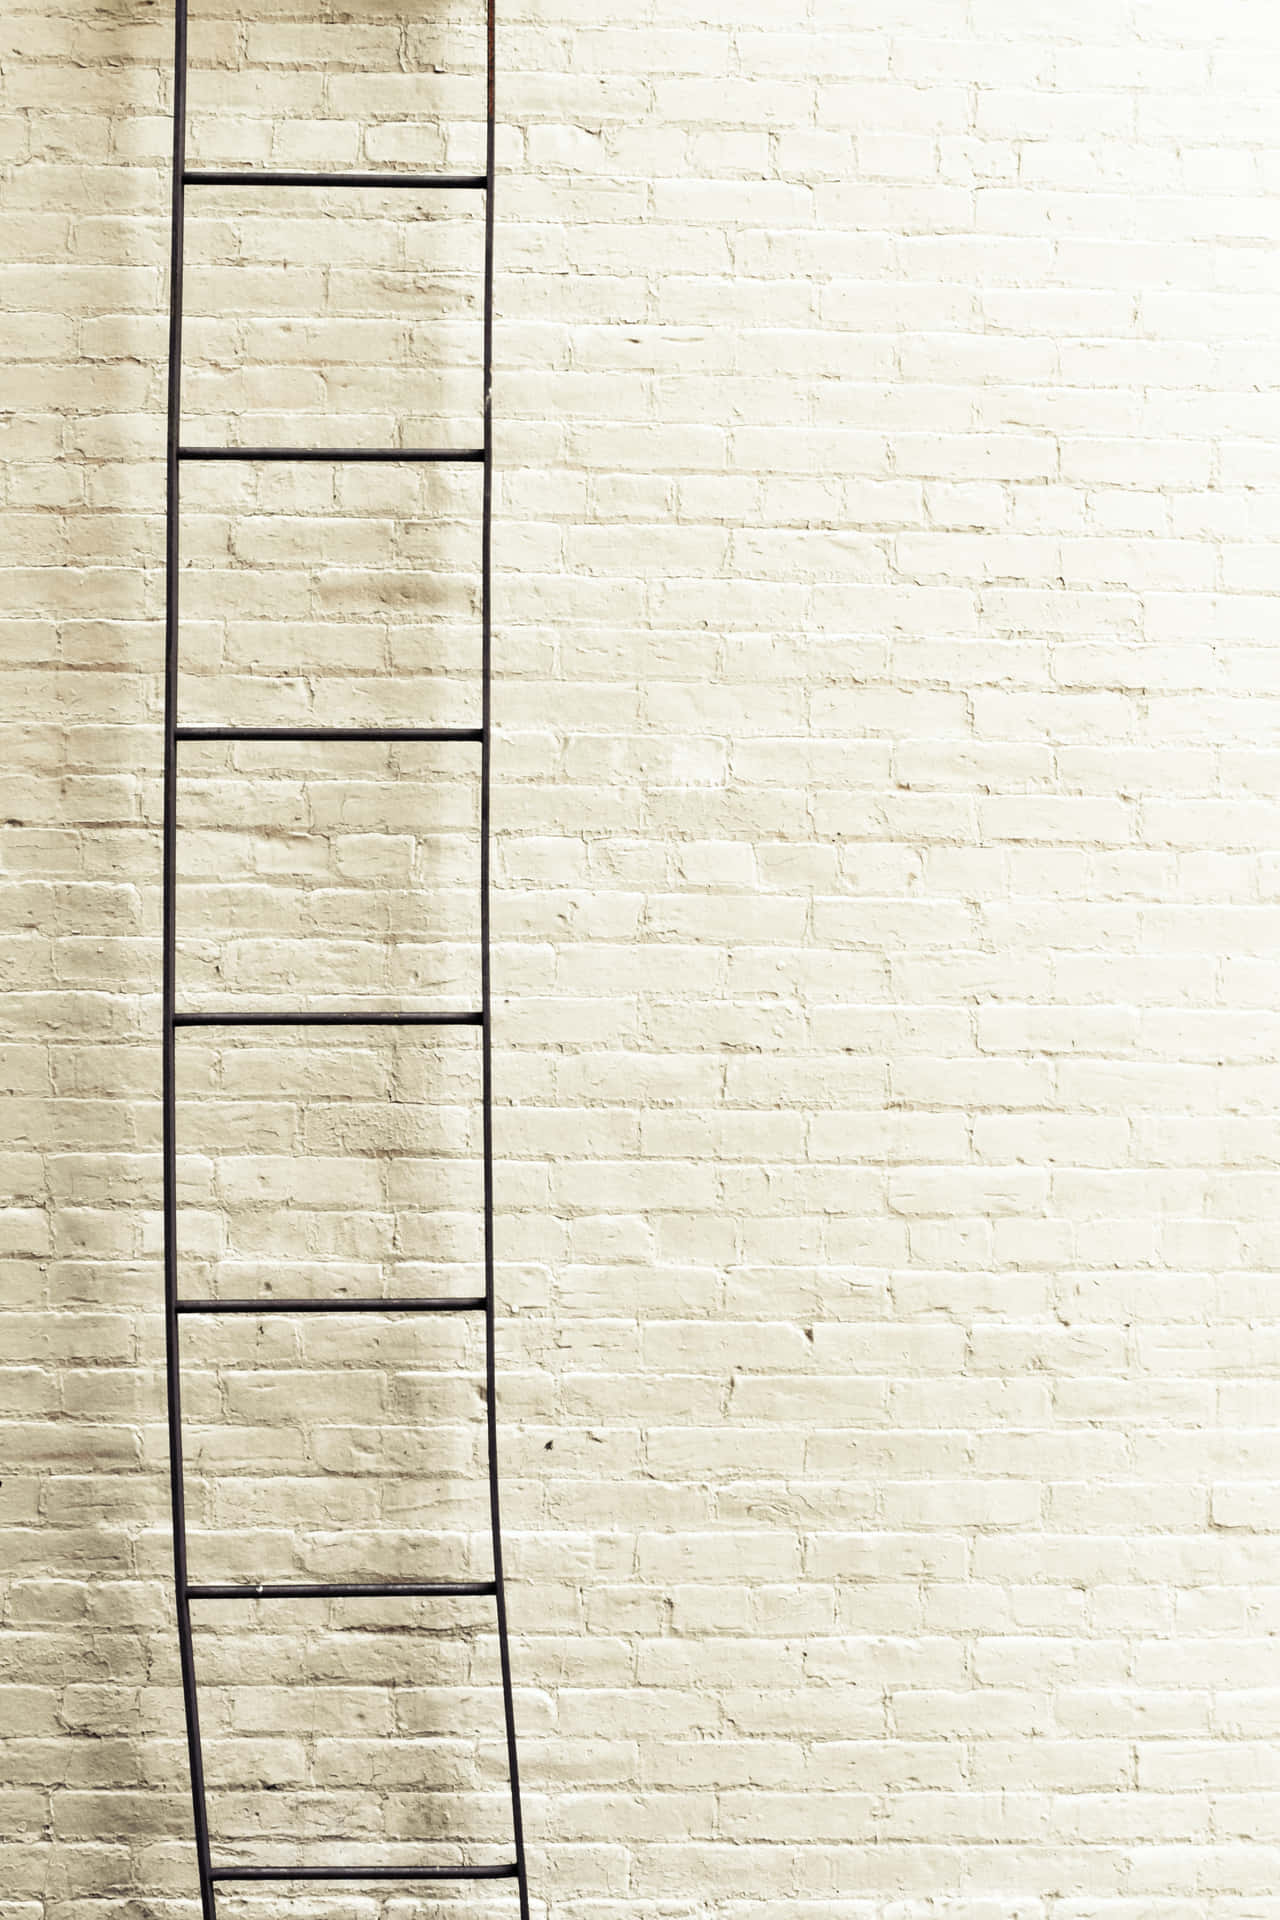 A Textured White Brick Wall